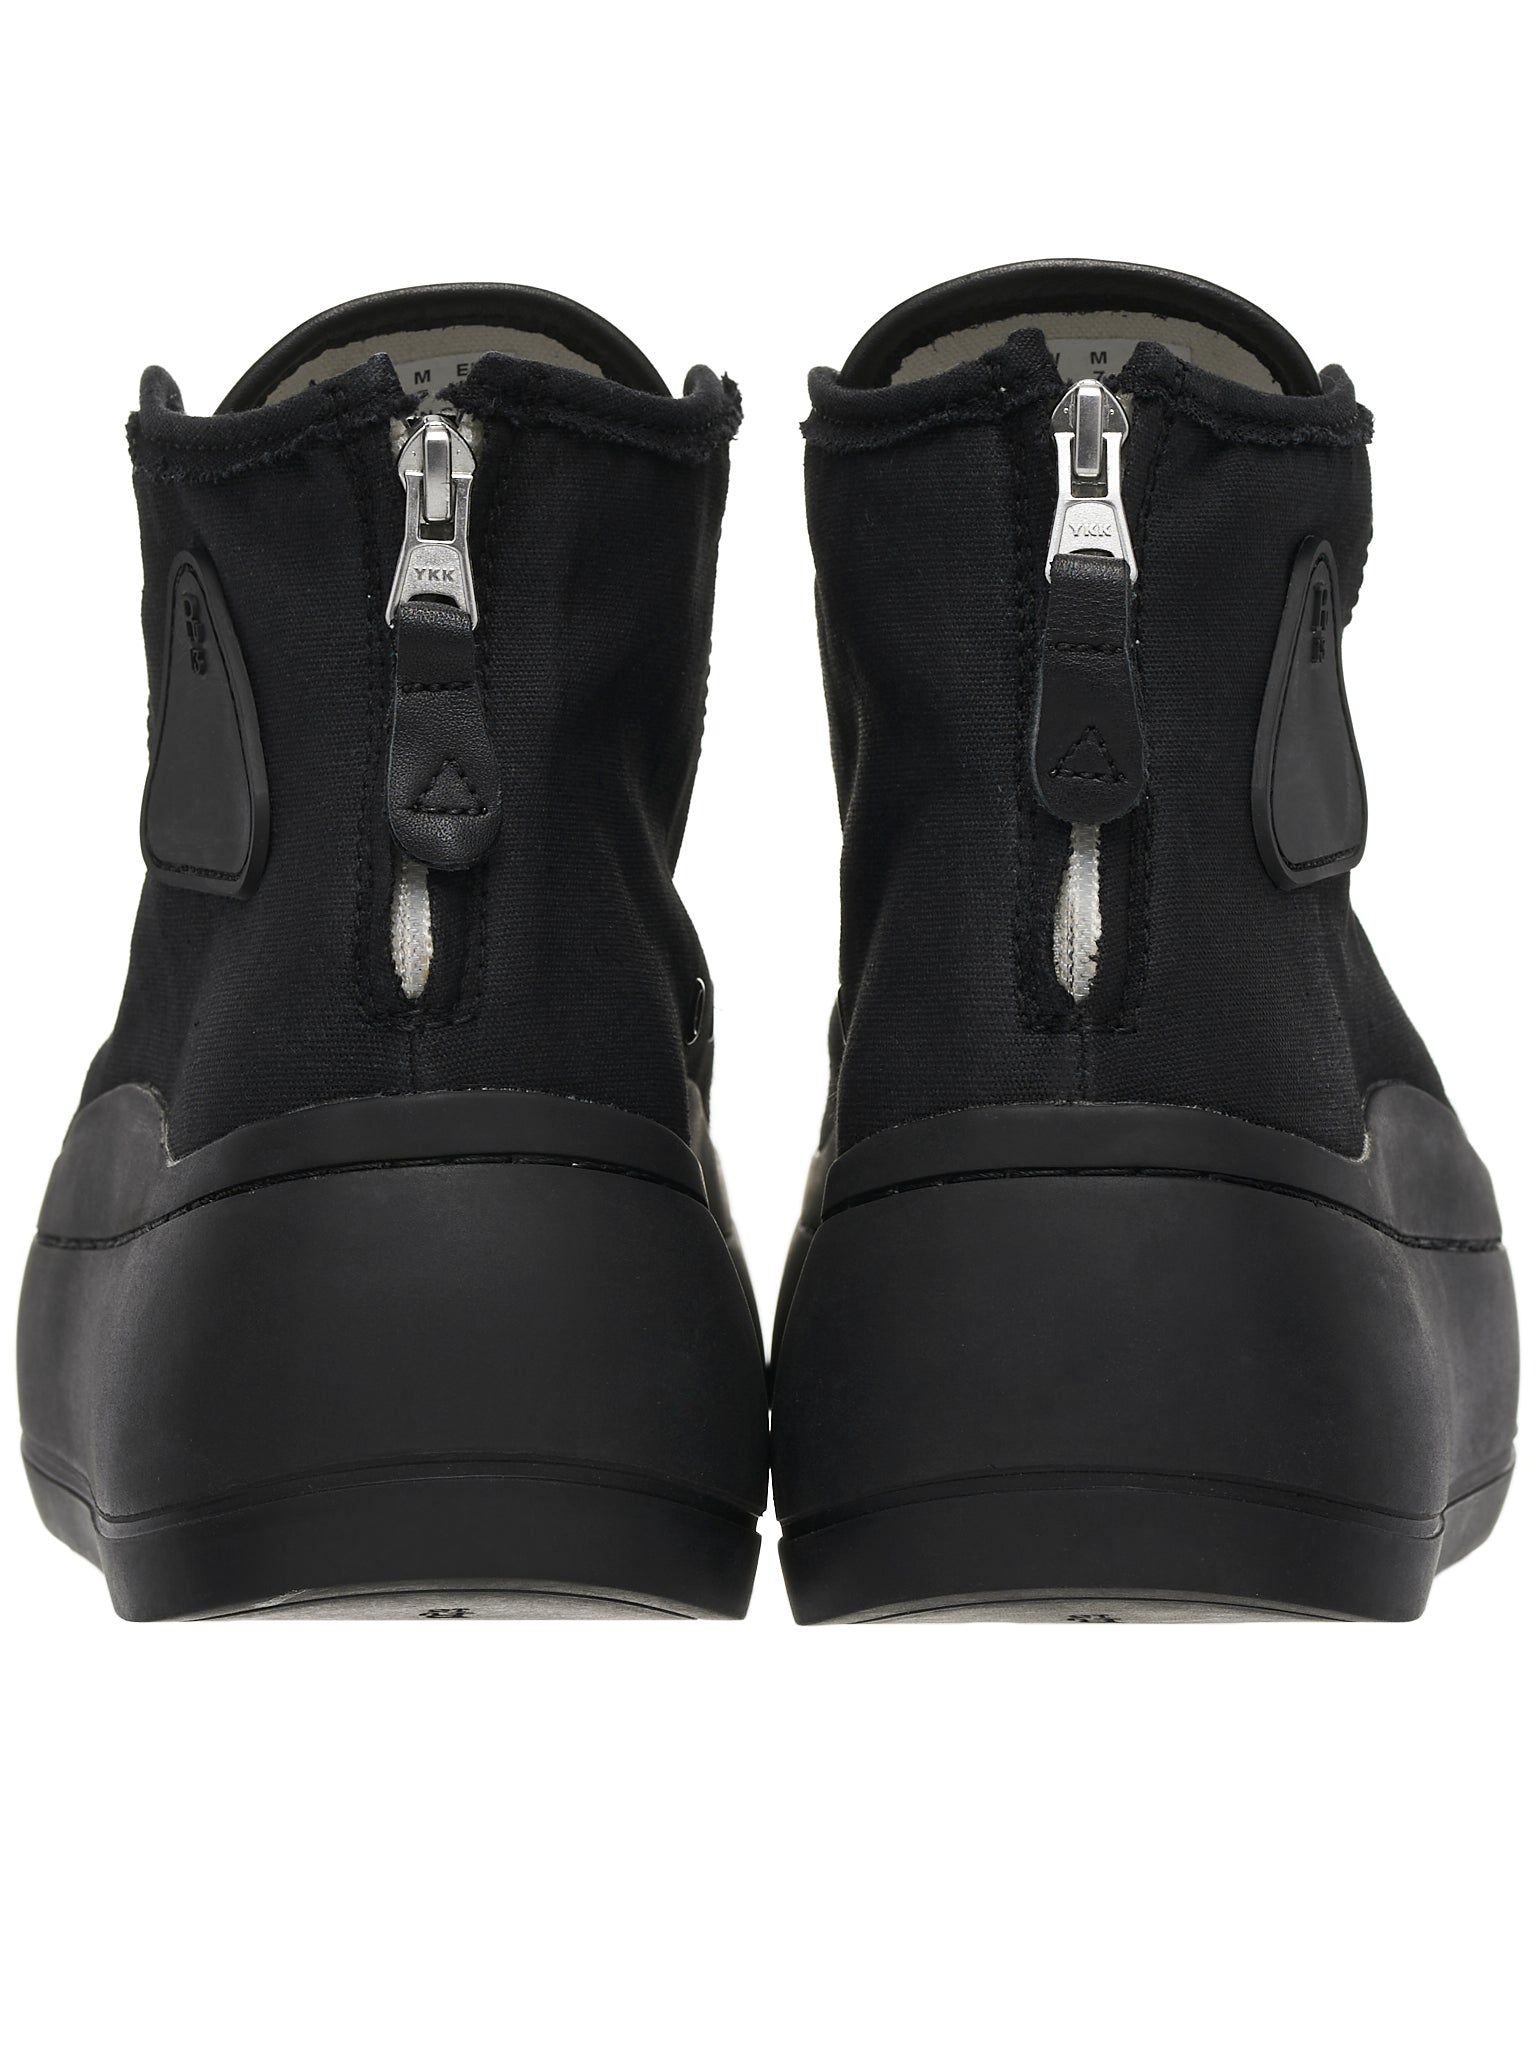 Lace Free Kurt Sneakers (R13S5032-001-BLACK)